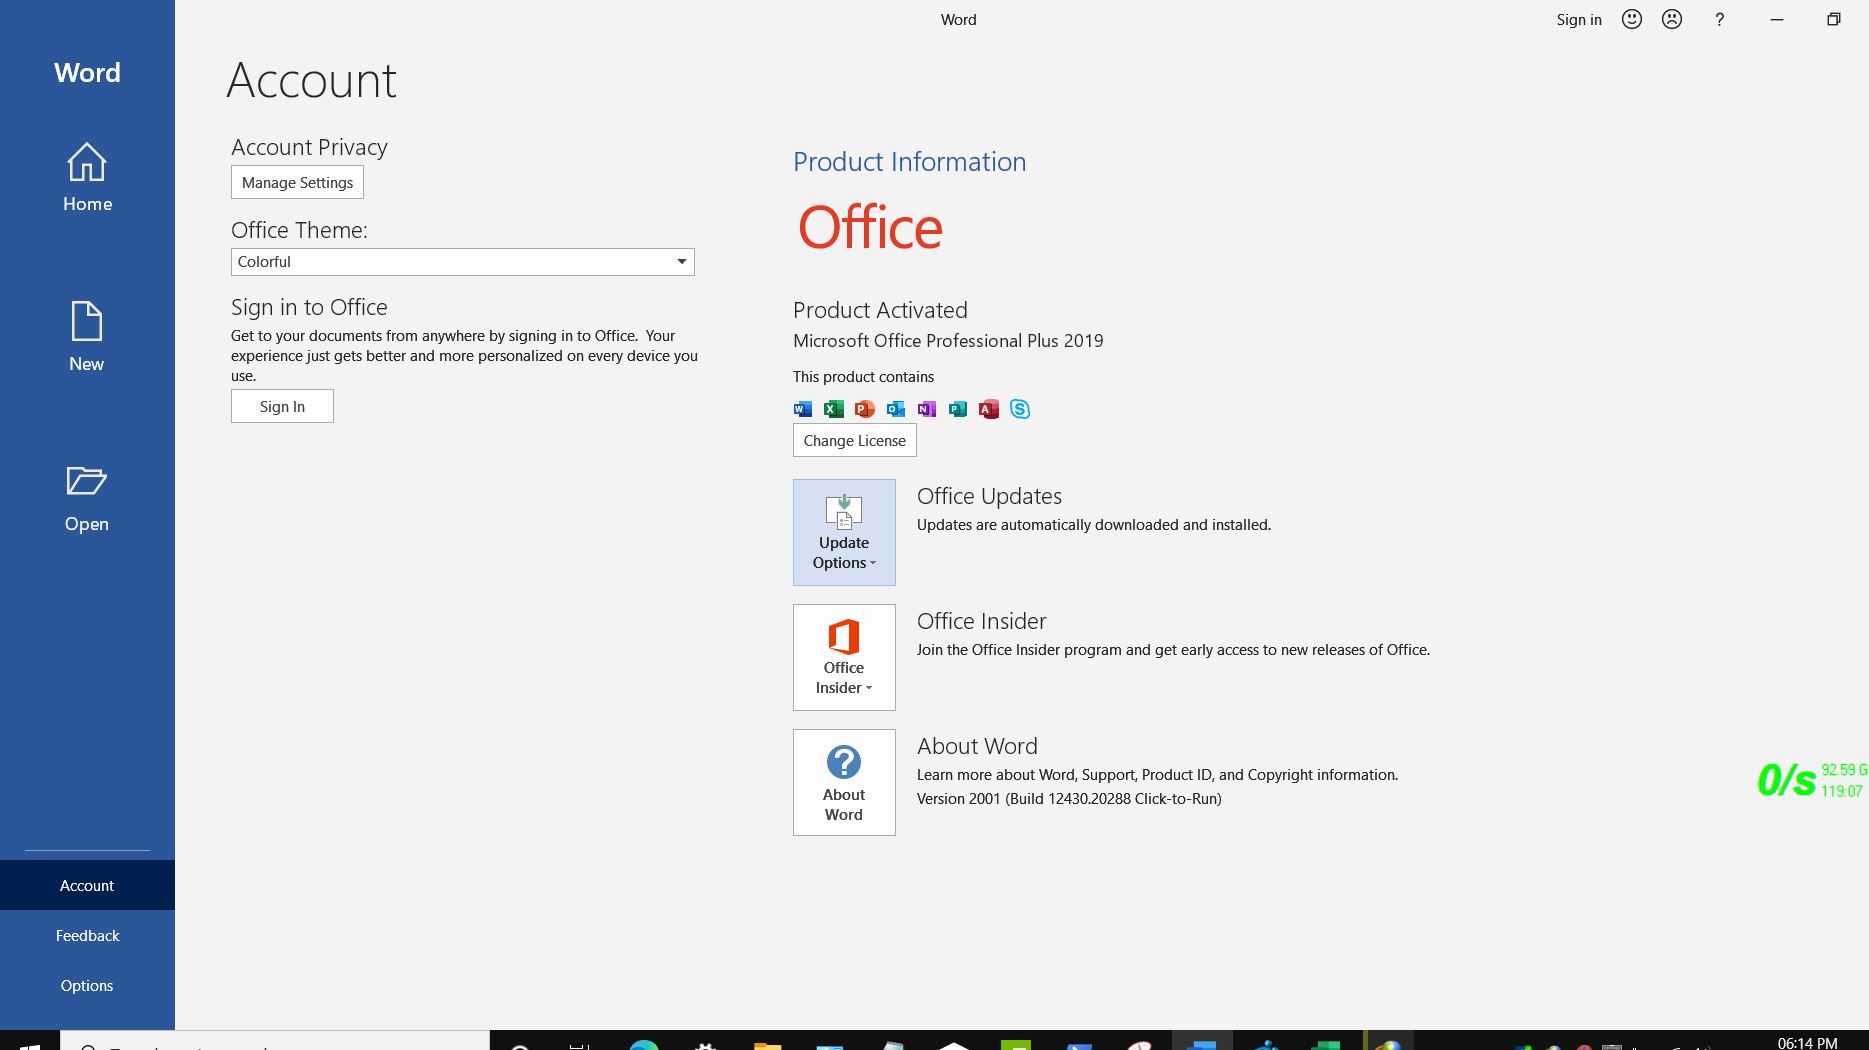 Microsoft Released Office 2019 Update v2001 (build 12430.20288 